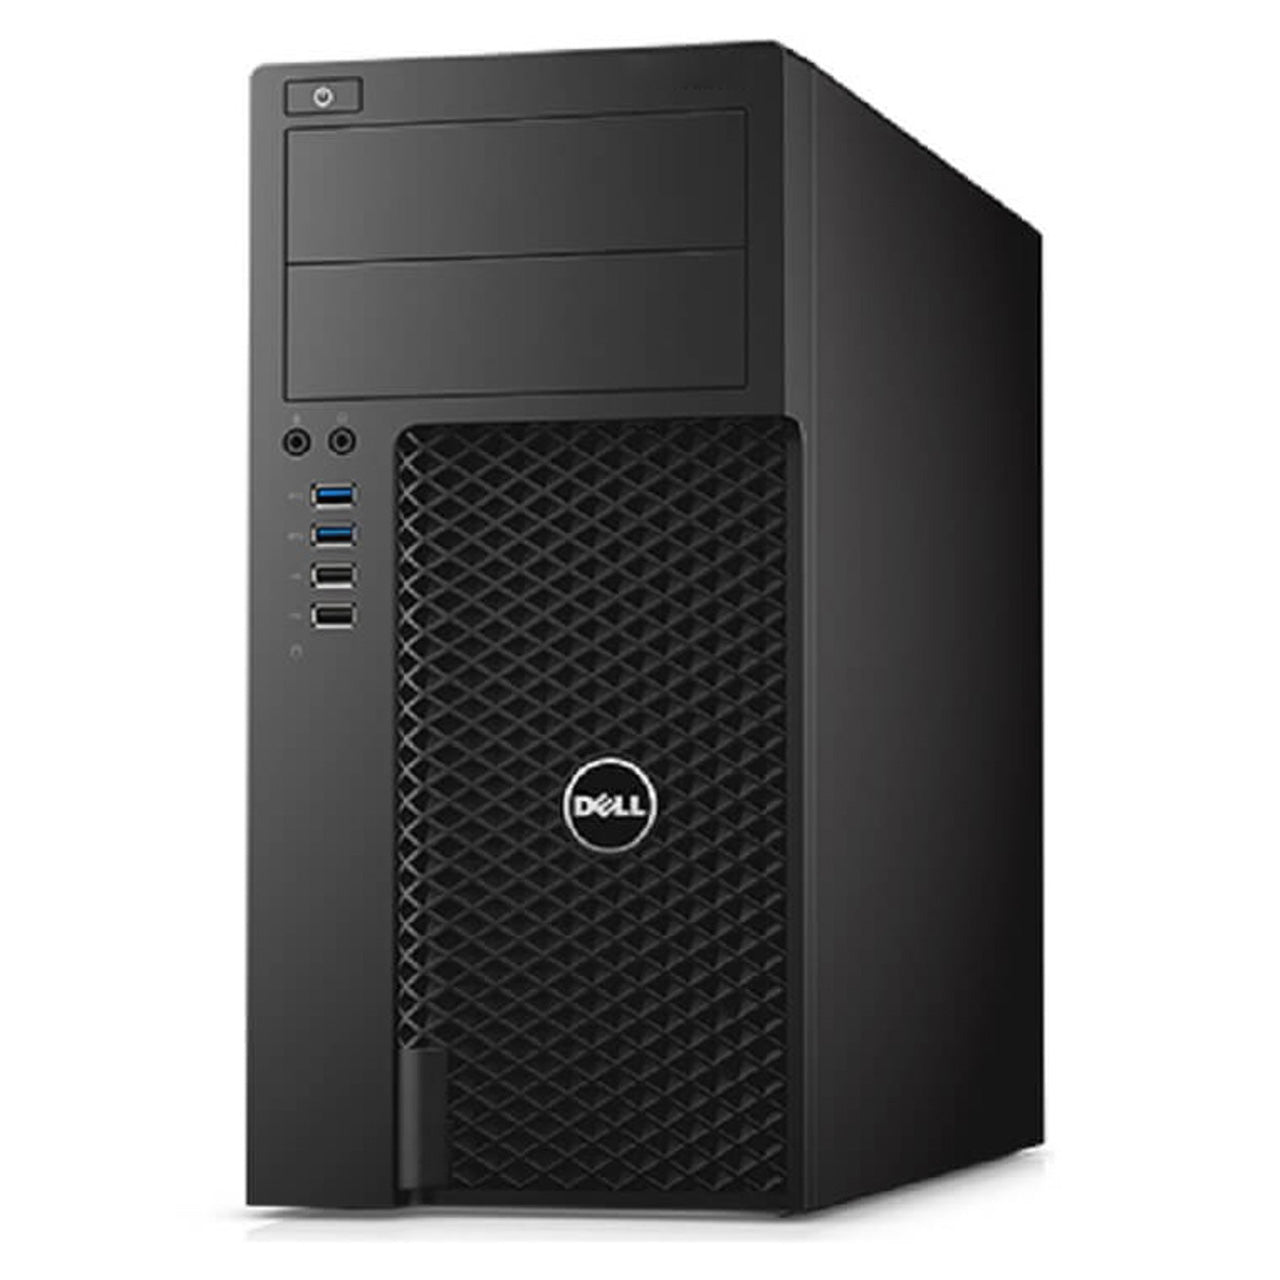 Dell Precision T1700 Tower Gaming Desktop Computer PC| Intel Core i5 - (4570) 4th Gen| 16GB - 32GB DDR3 RAM| 512GB -2TB SSD| Windows 10 Pro| RX550, GT1030, GTX 1630, 1050Ti, 1650 - Refurbished